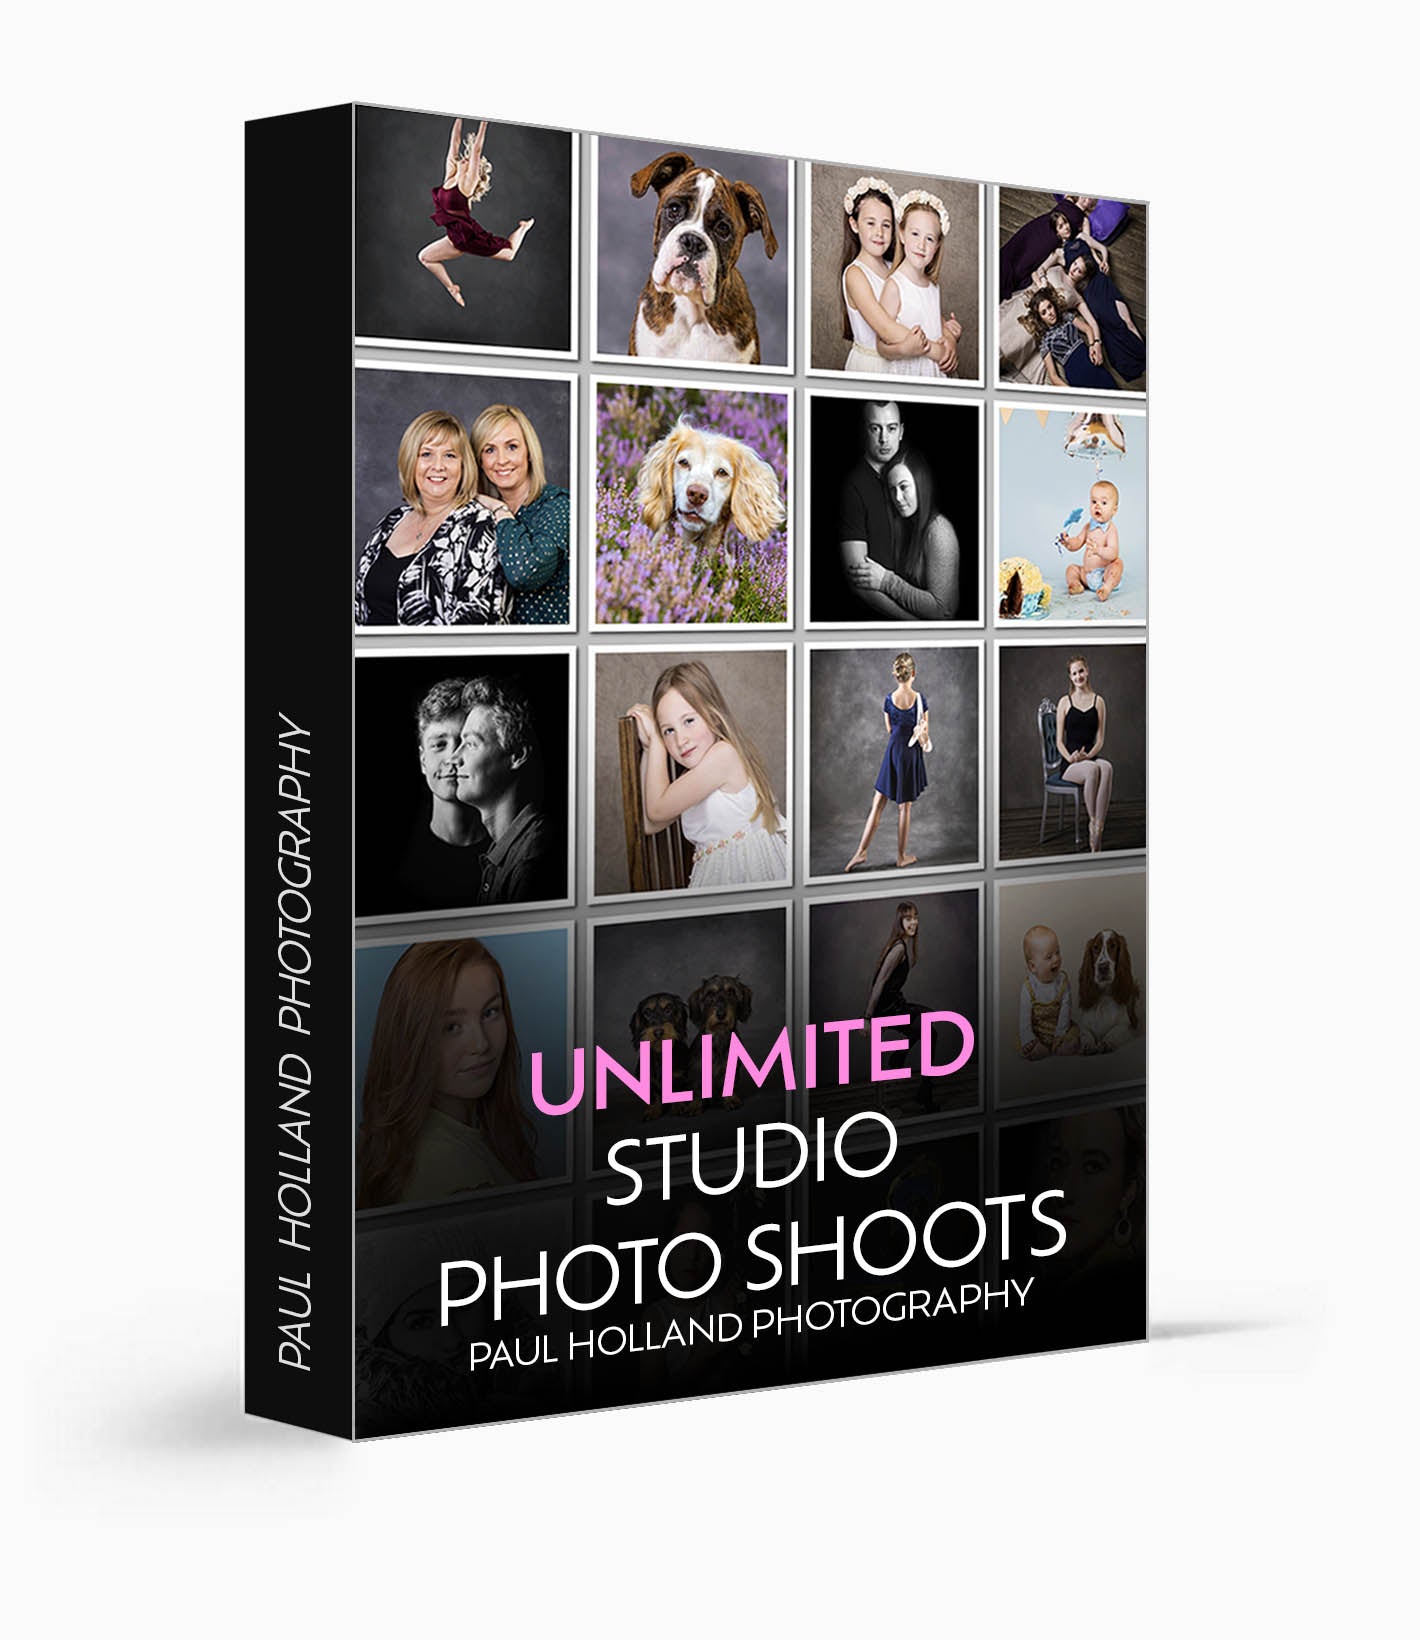 Studio Passport - UNLIMITED Studio Photo Shoots for 1 Year!